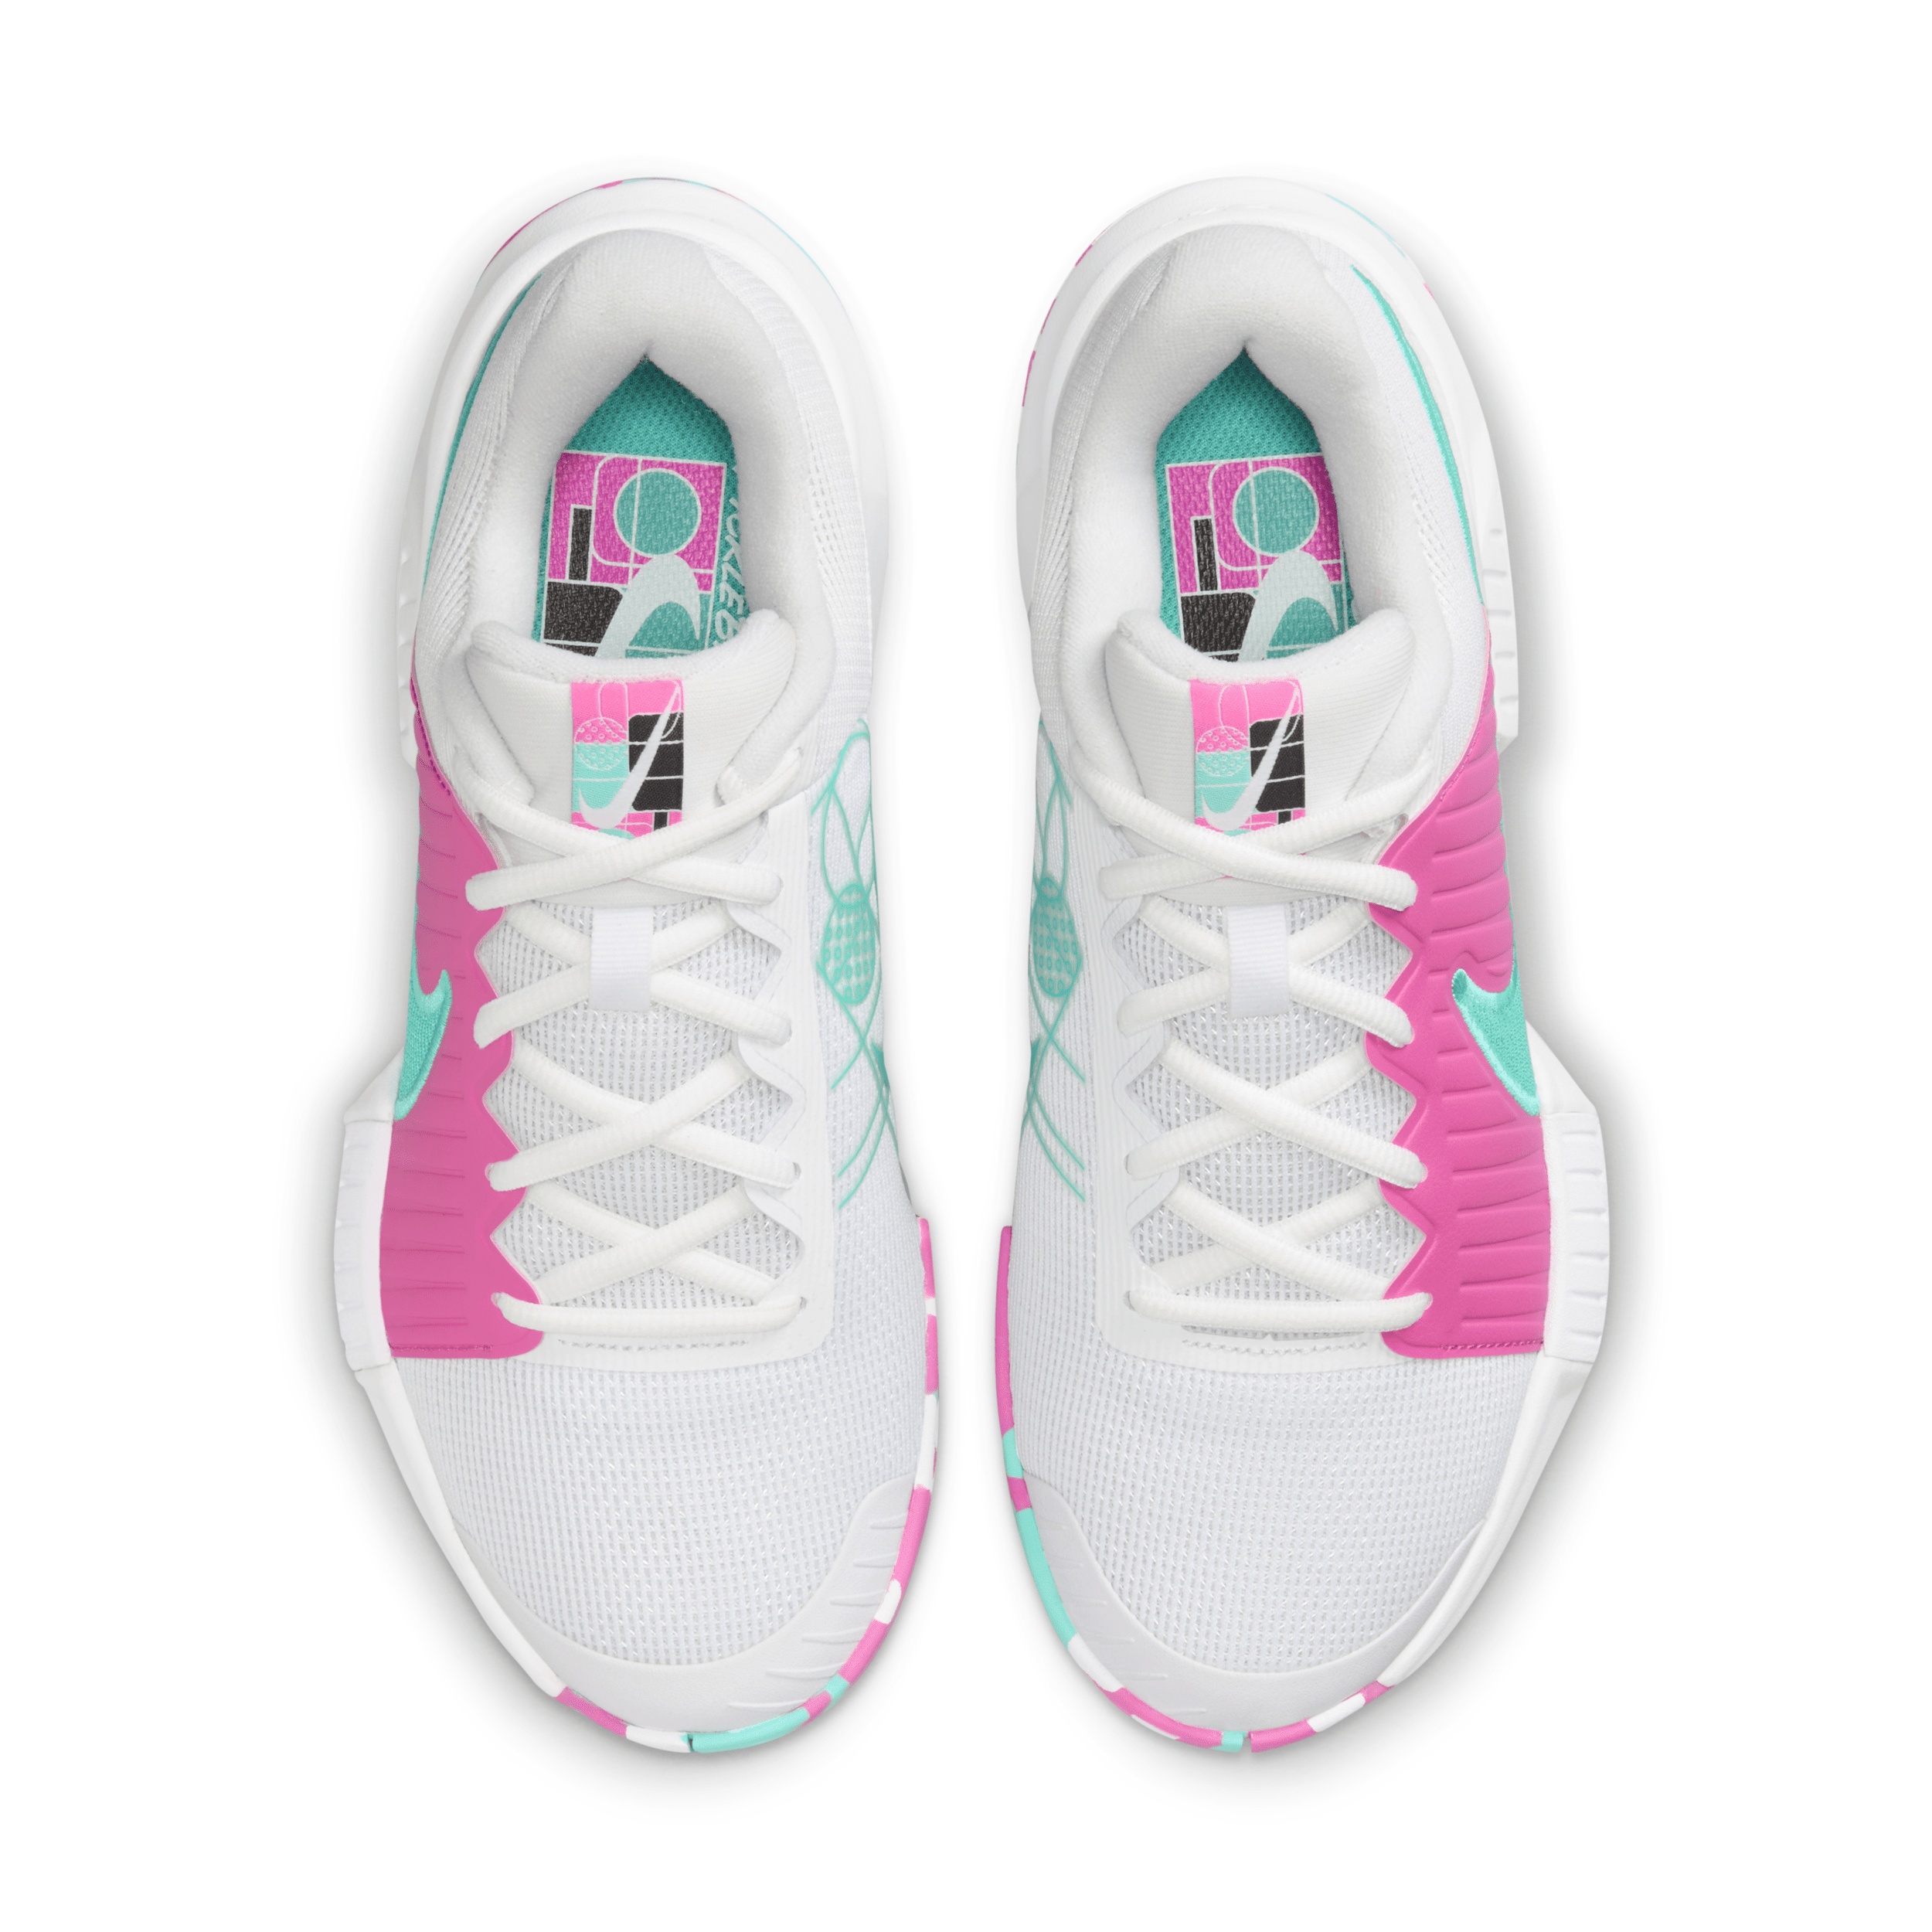 Nike Women's Zoom Challenge Pickleball Shoes - 4